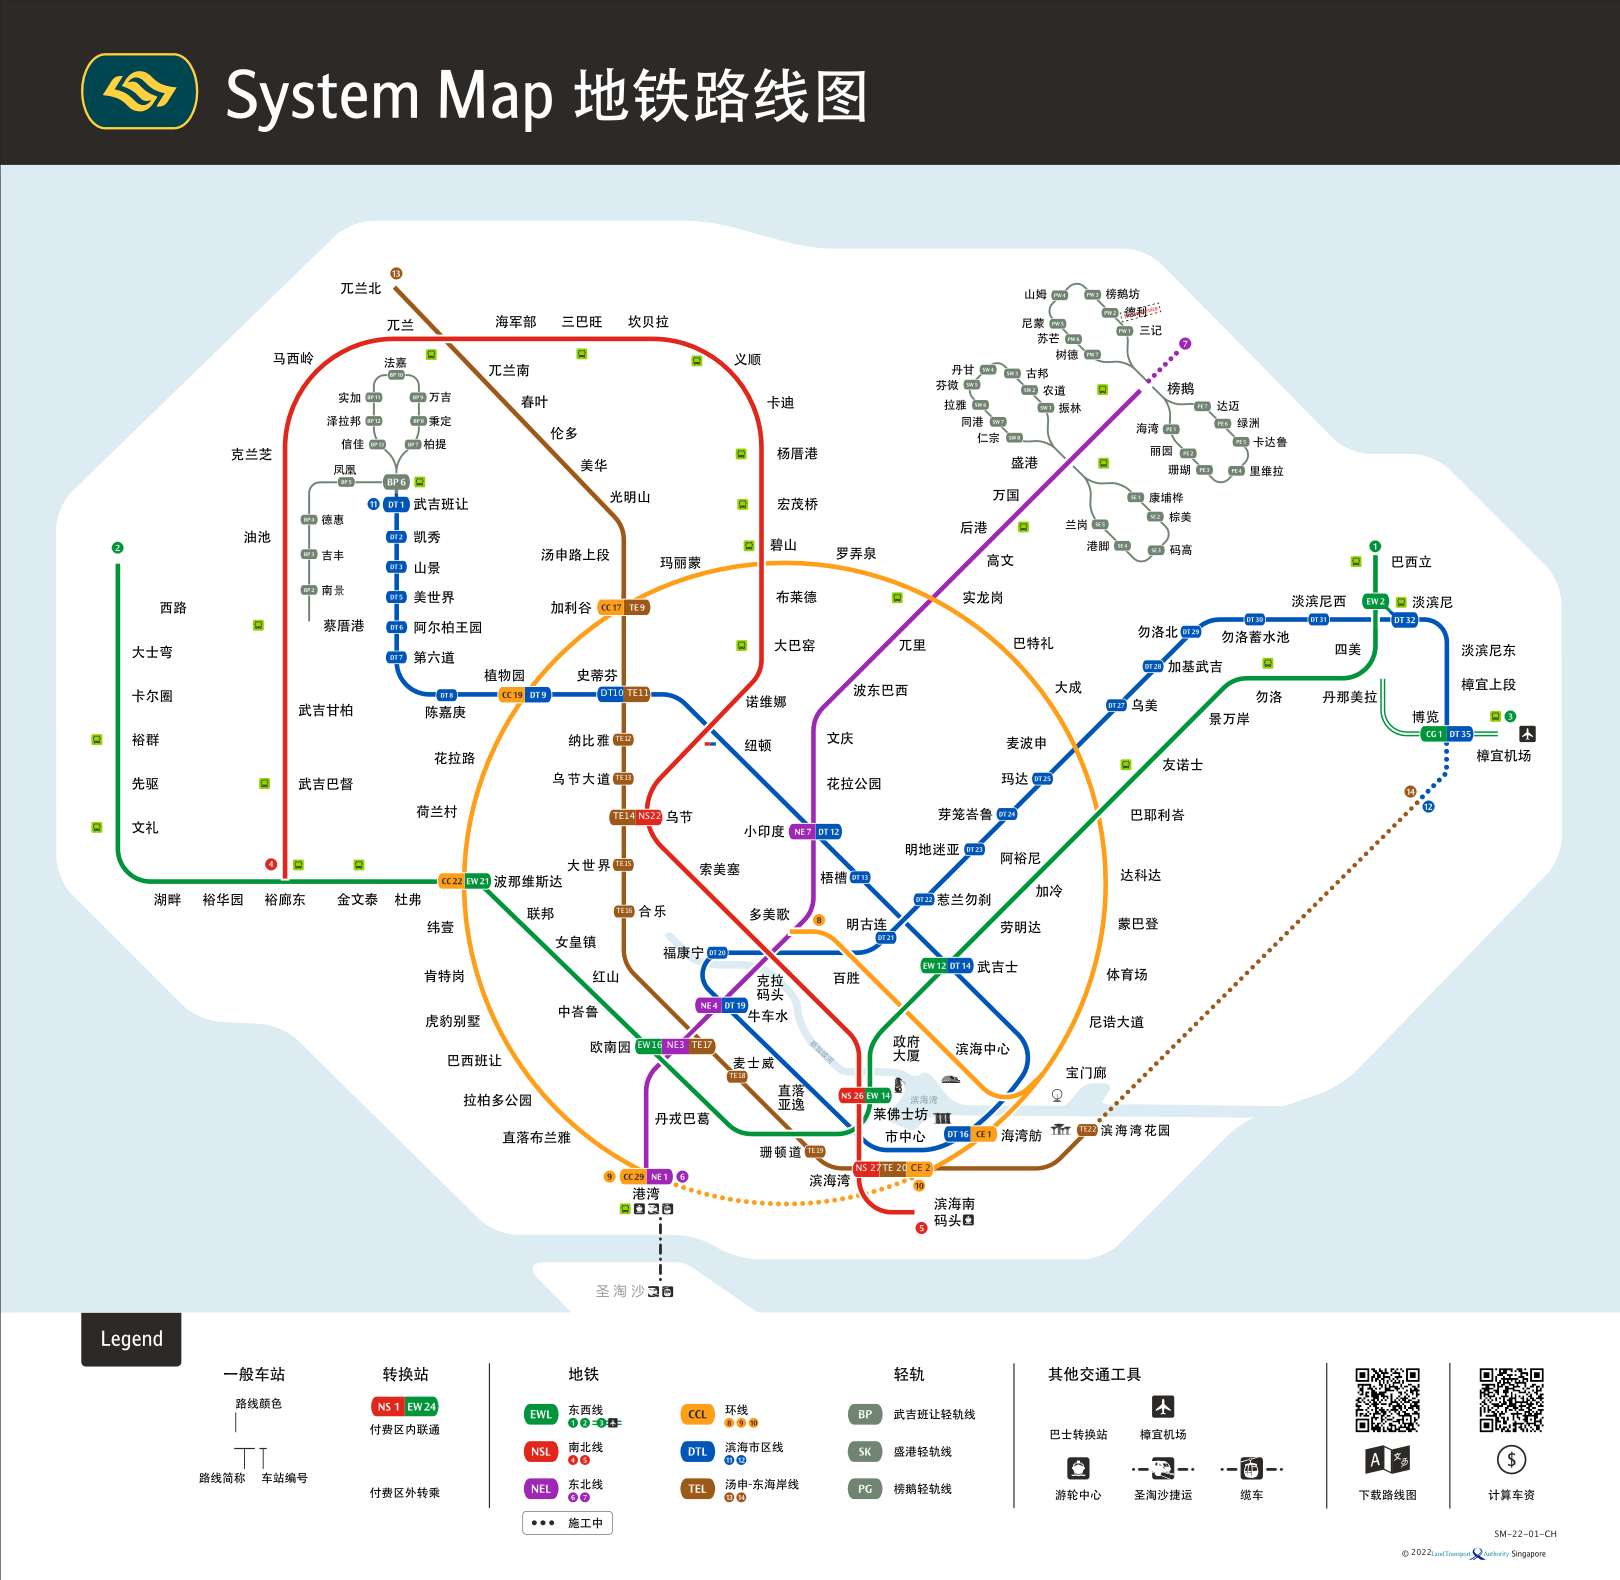 MRT Map (LTA) - MRT Map of Singapore